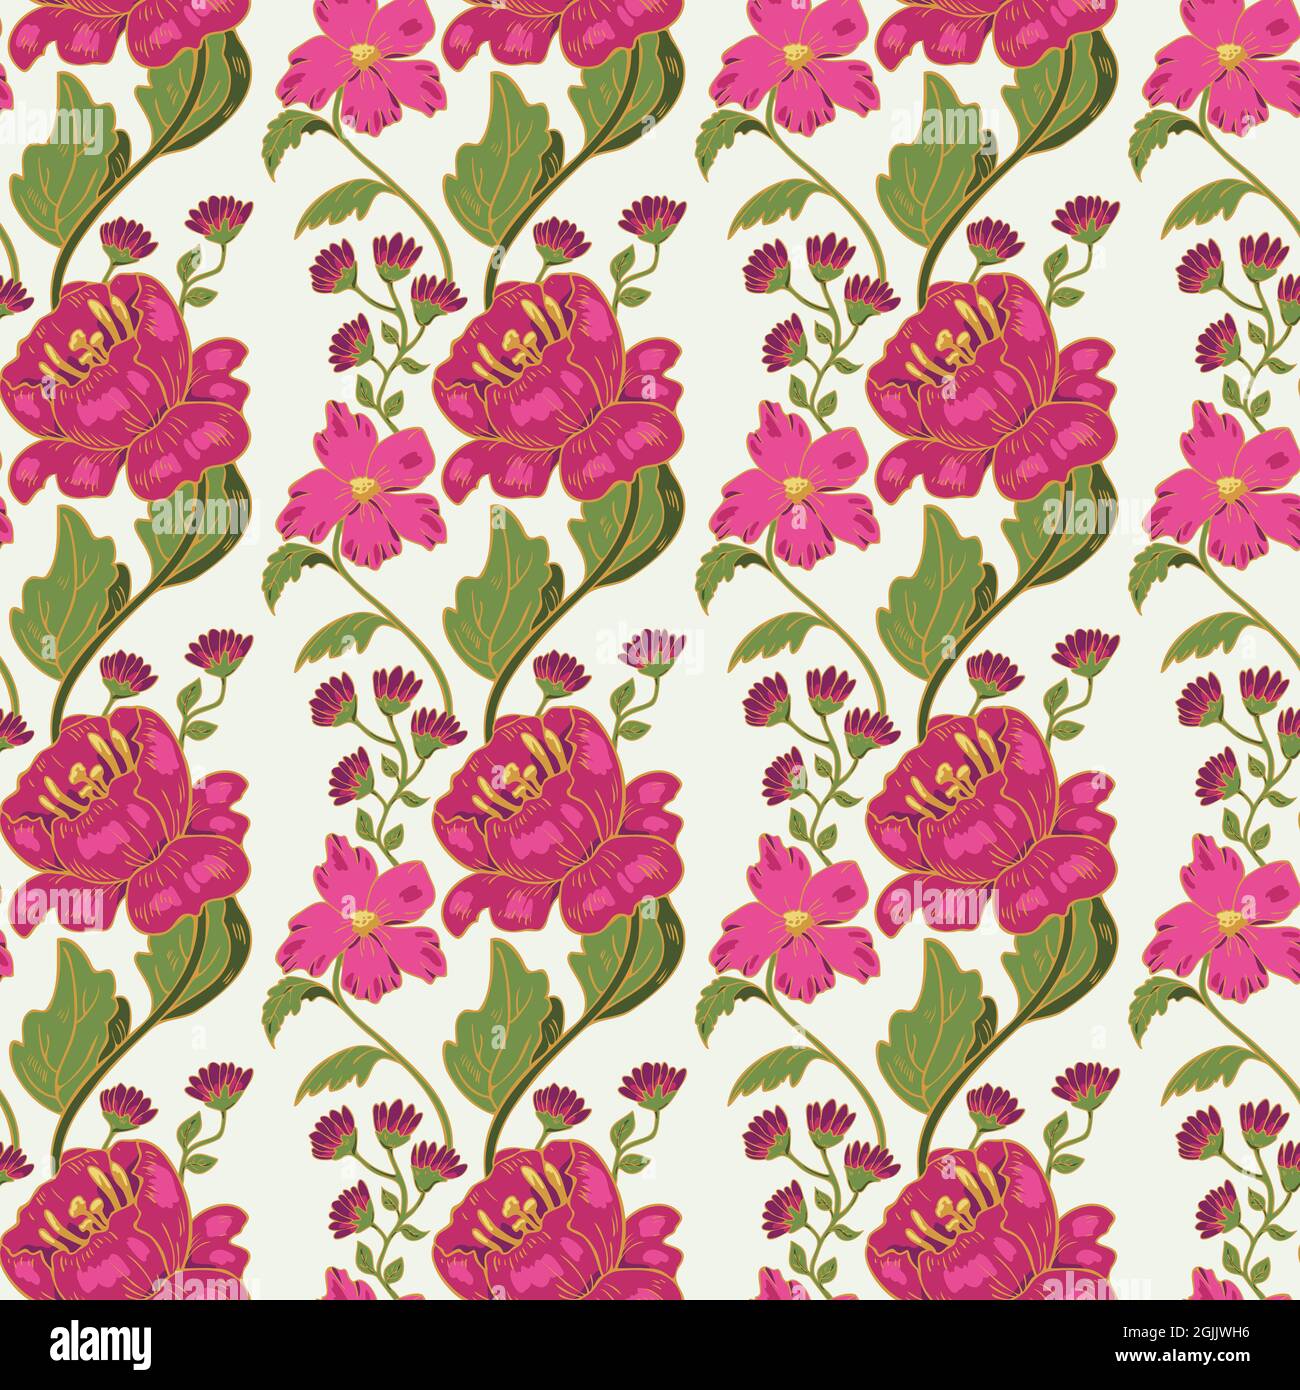 Vektor Nahtloses Muster mit dekorativen Blumen. Raffiniertes Design mit stilisierten Pfingstrosen. Stock Vektor